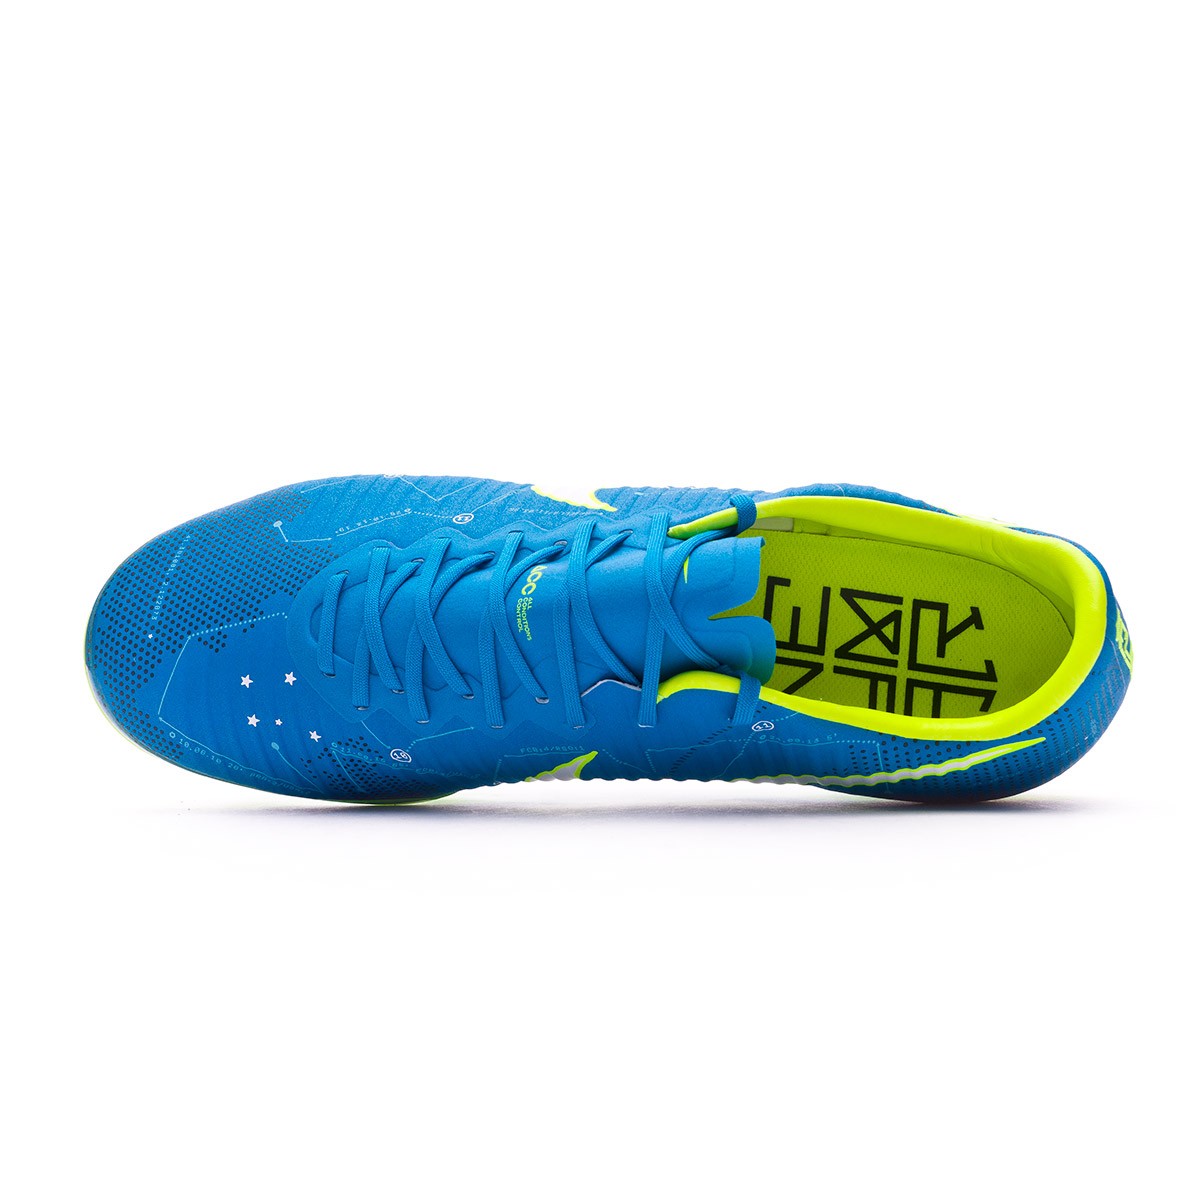 neymar blue boots